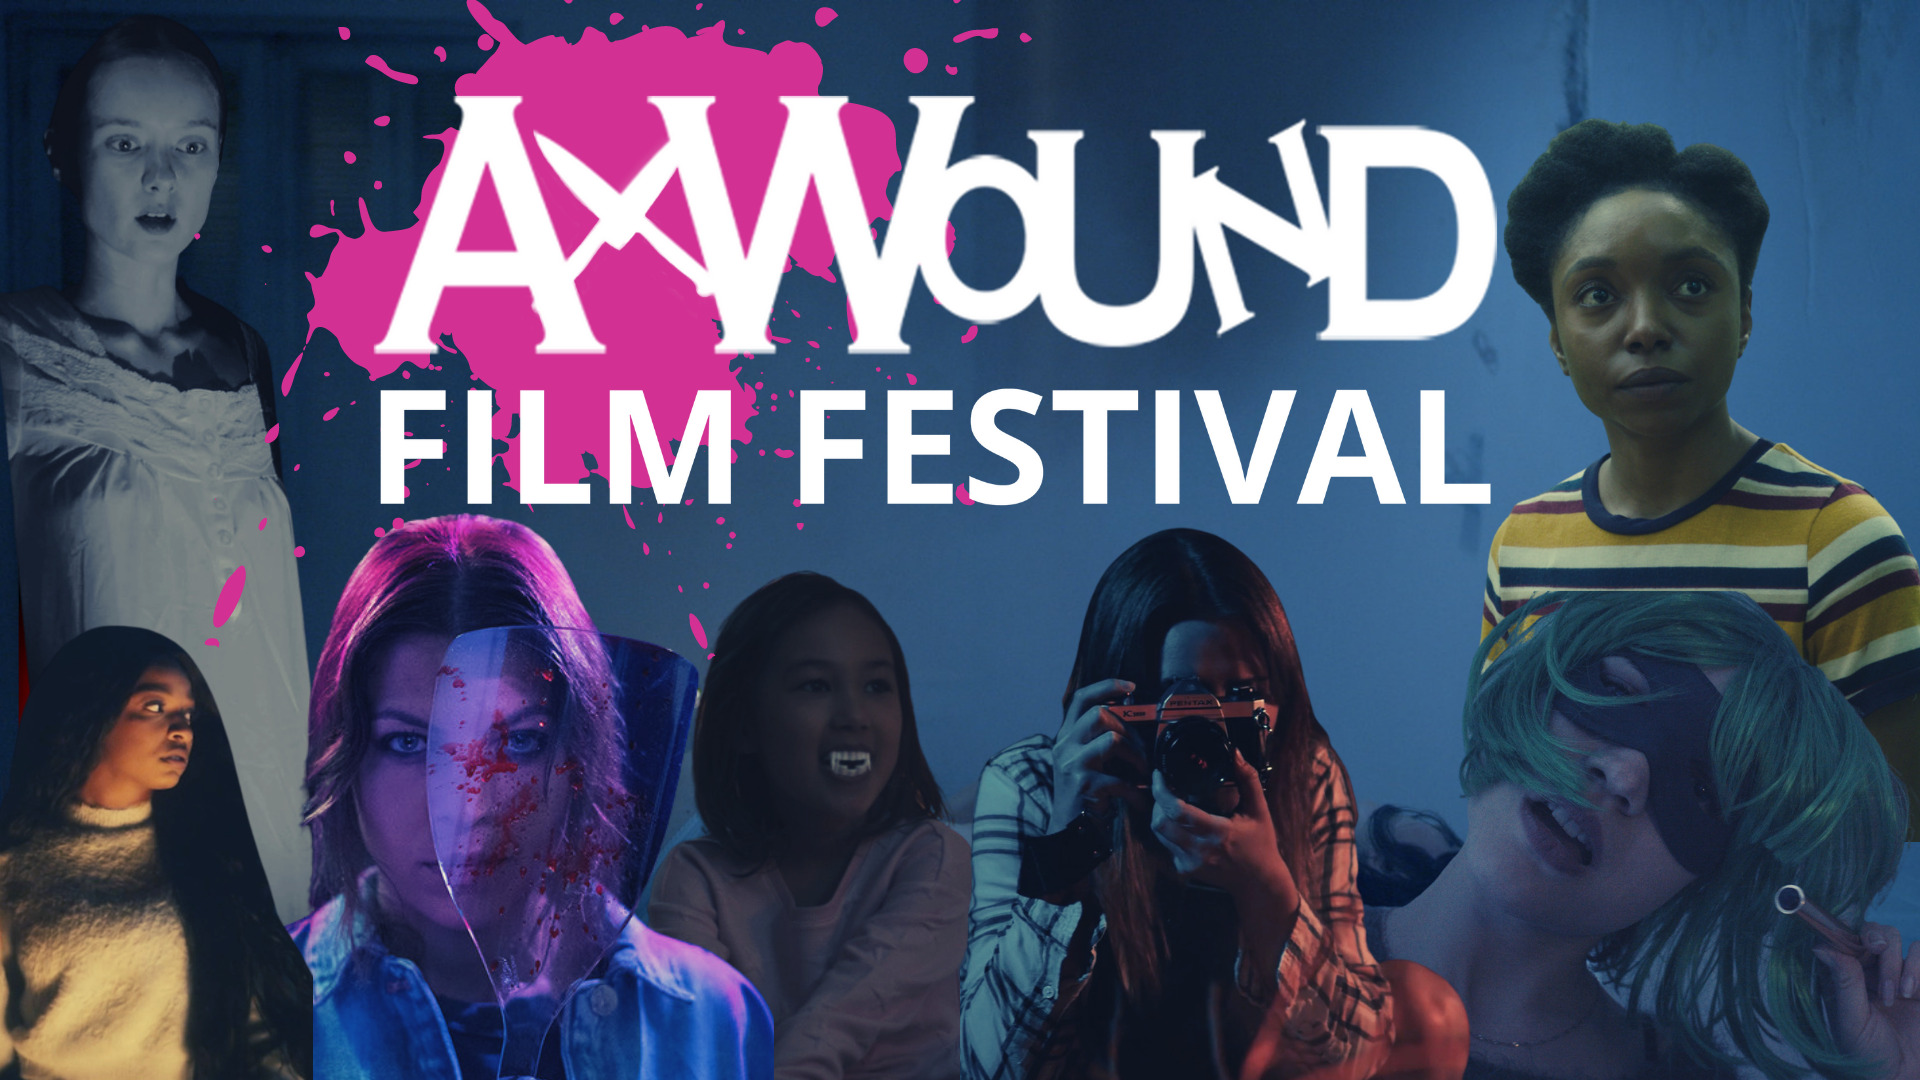 The 6th Annual Ax Wound Film Festival